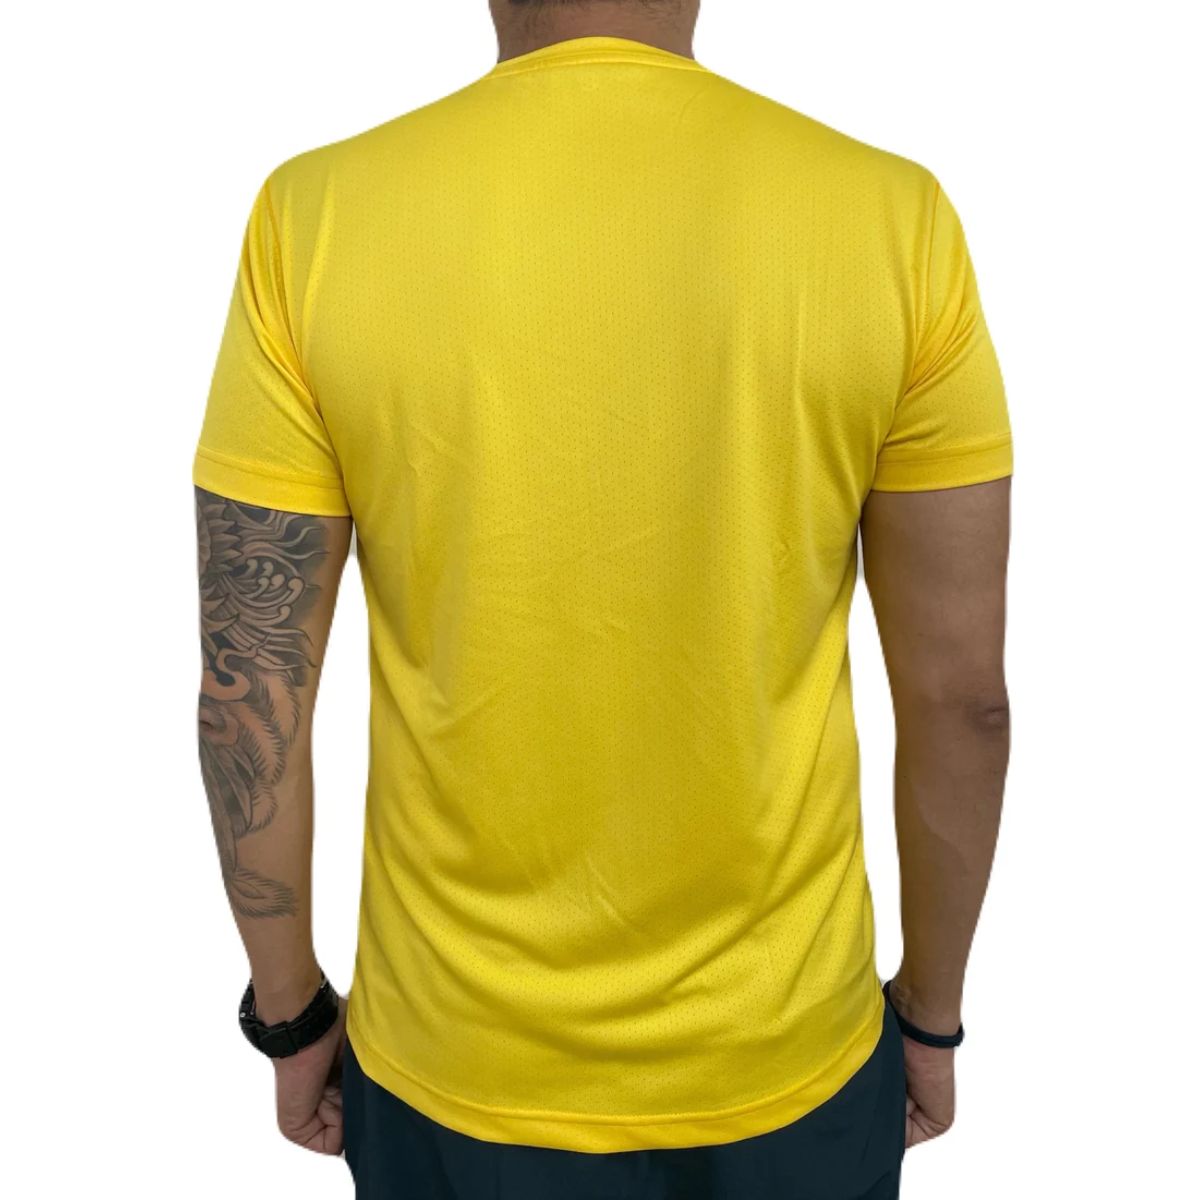 Kalimpong Activewear DryFit T-shirt - Half Sleeves - Yellow 2